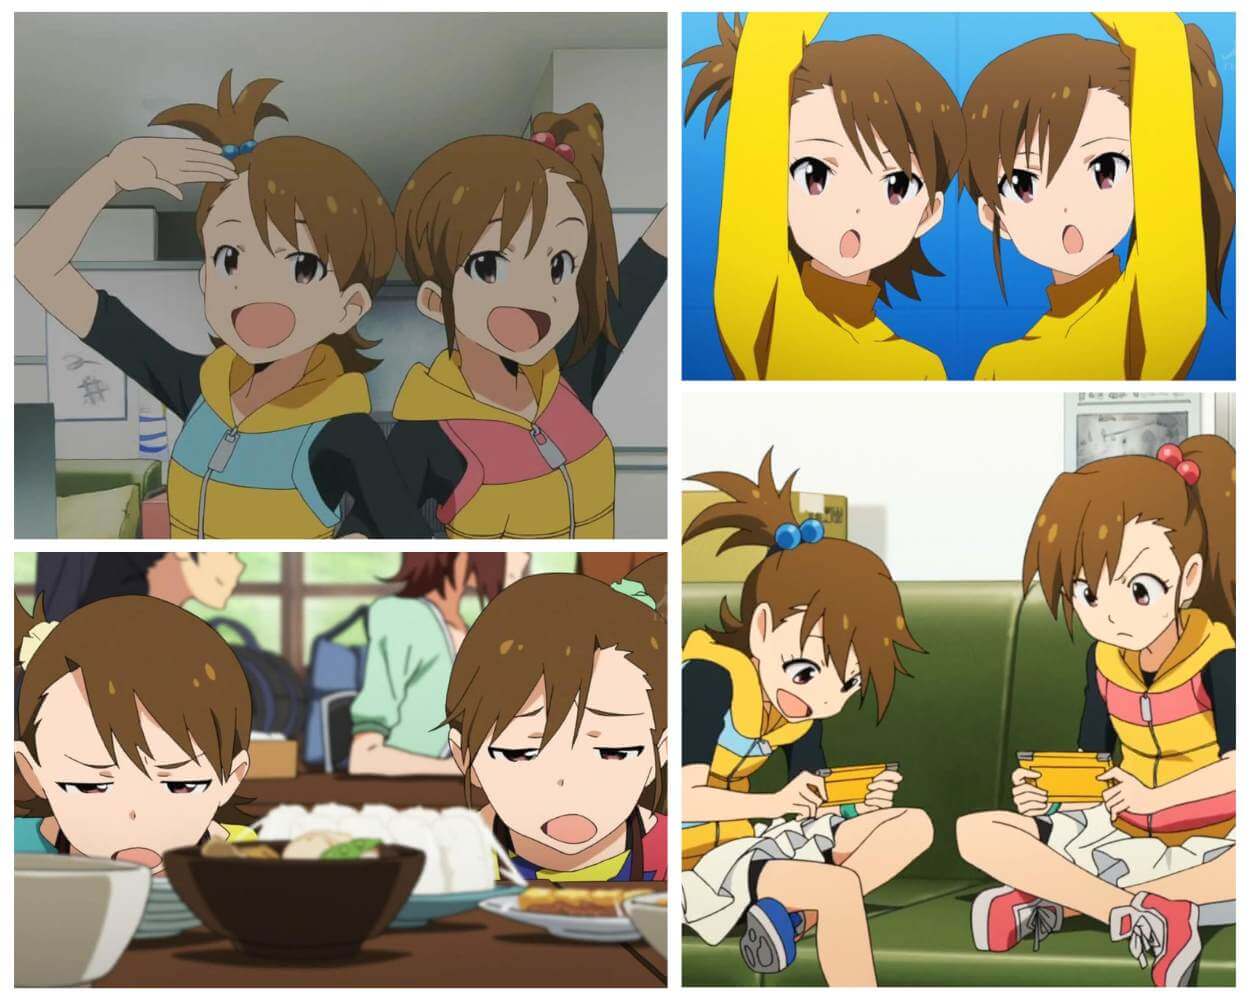 Anime Summer Twins [Rinmaru Games]-demhanvico.com.vn